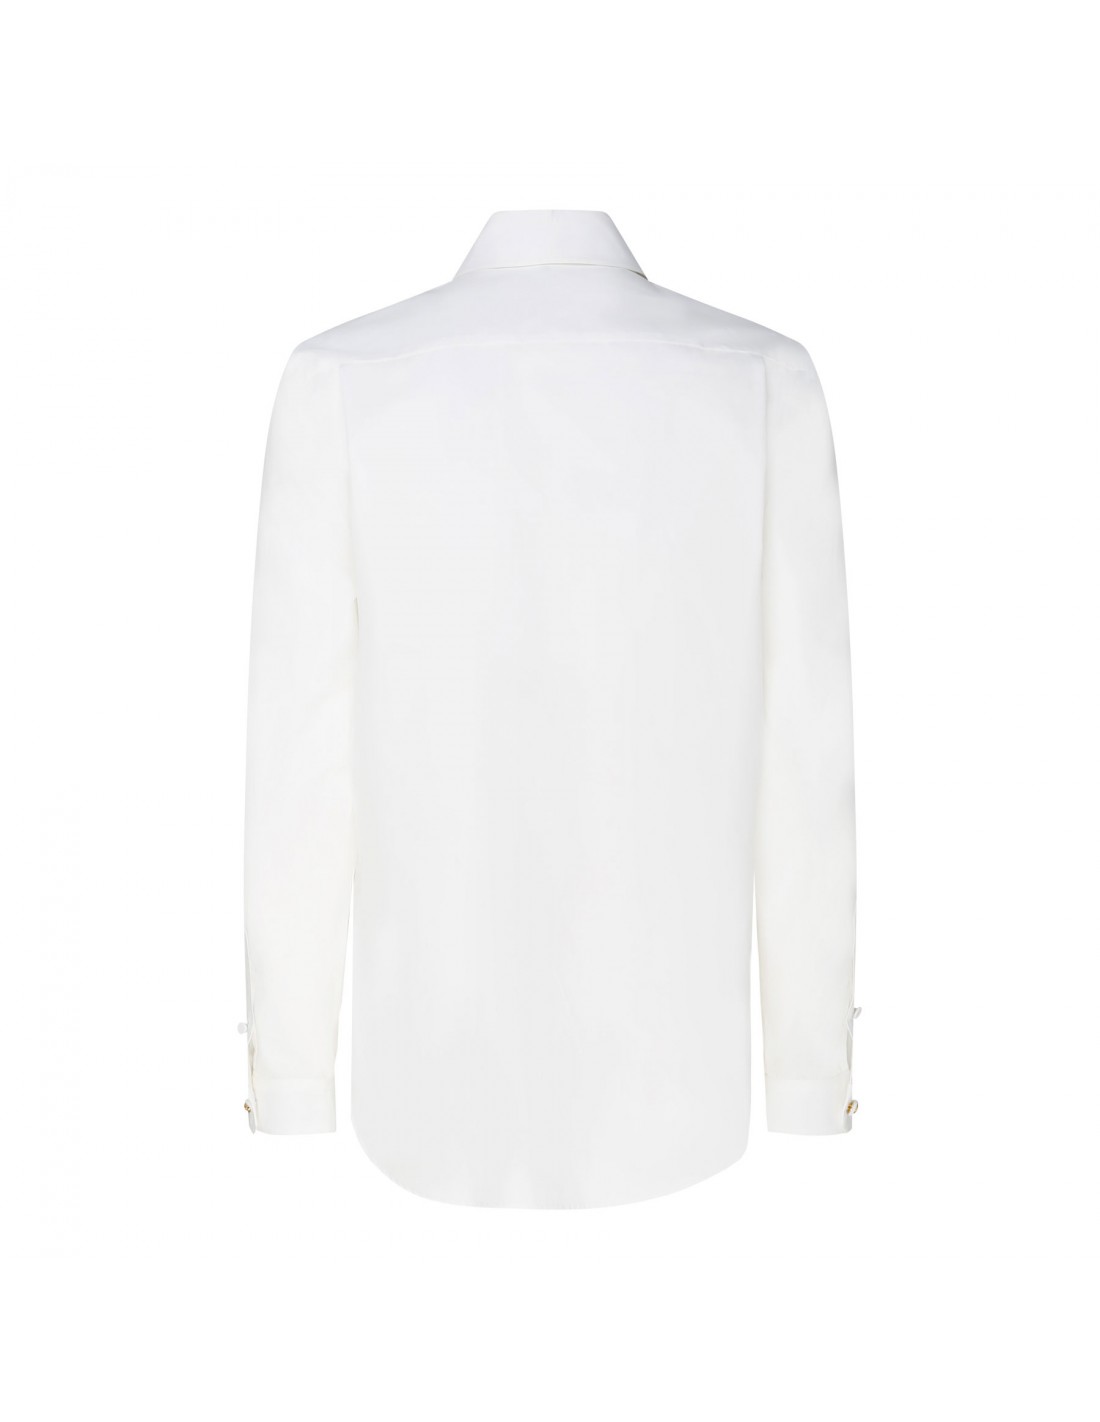 White cotton Oxford shirt